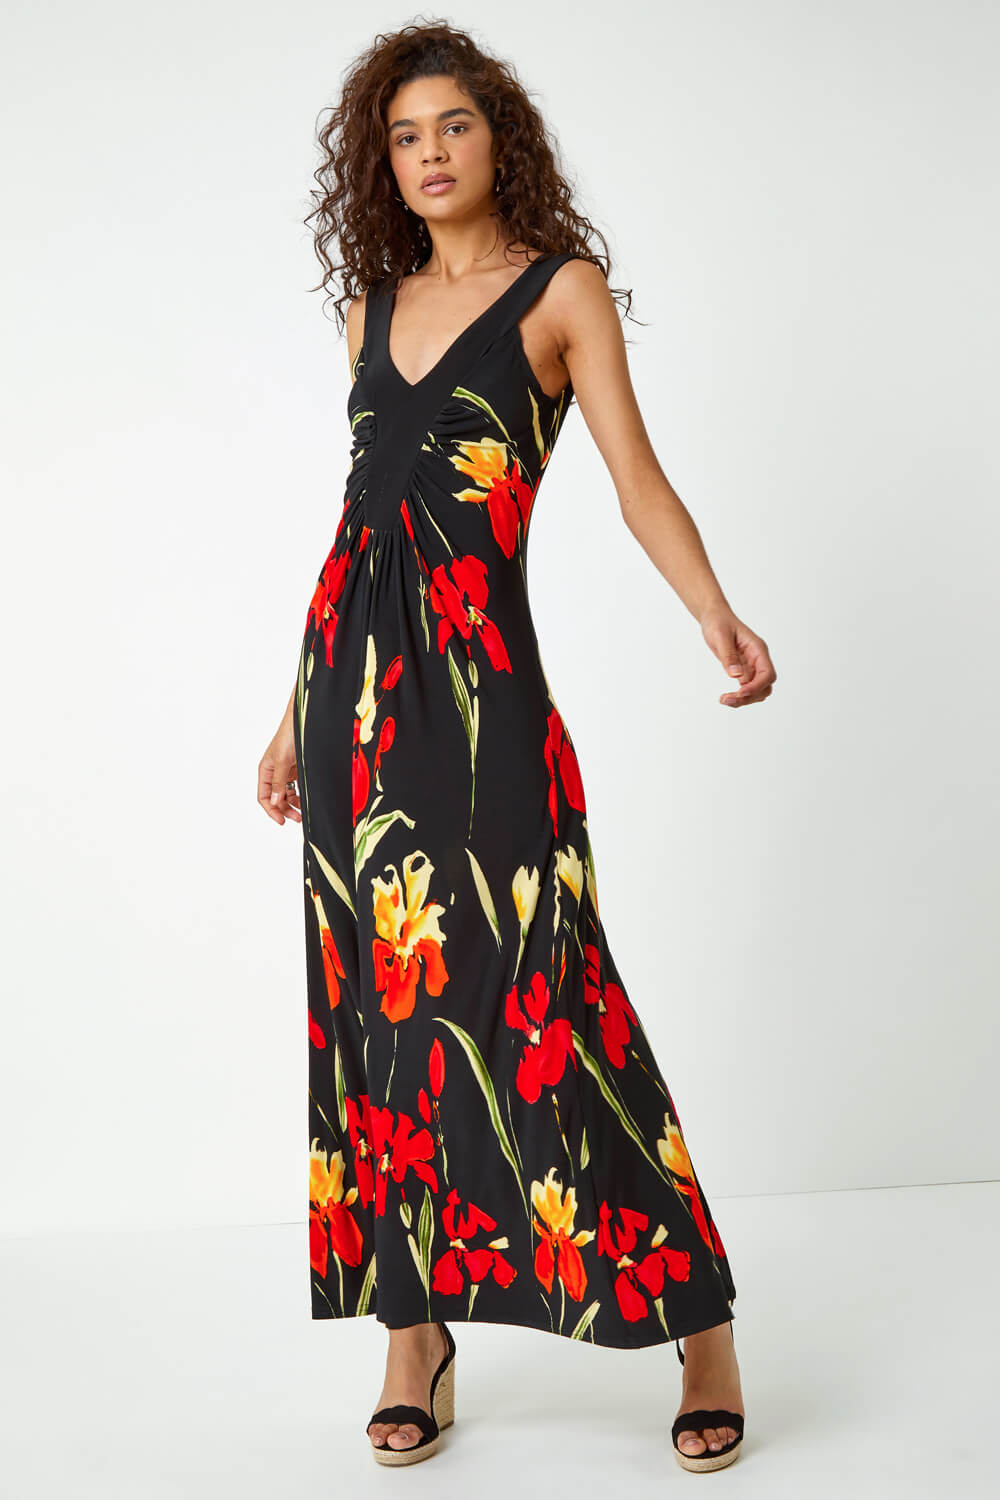 Floral Stretch Jersey Maxi Dress in Black - Roman Originals UK